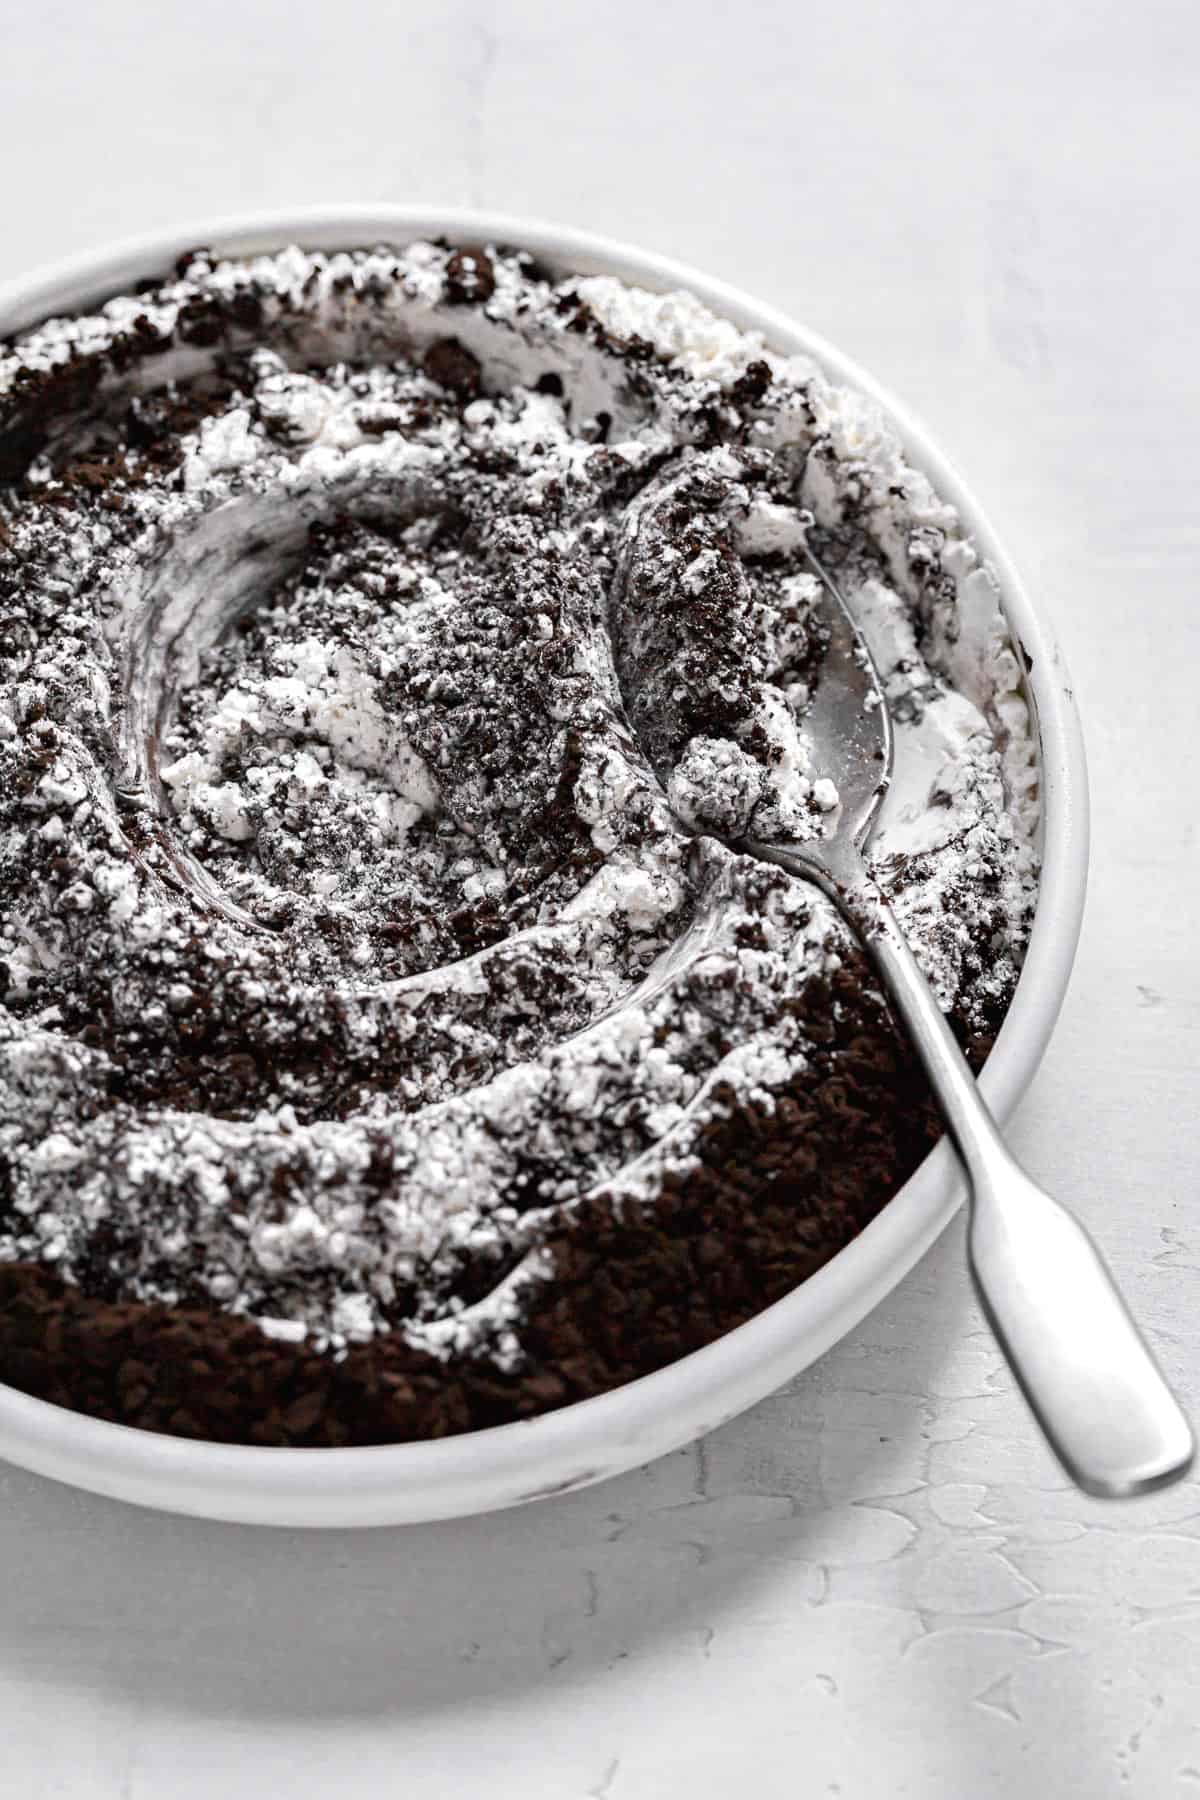 black cocoa powder mixed in flour in white bowl.